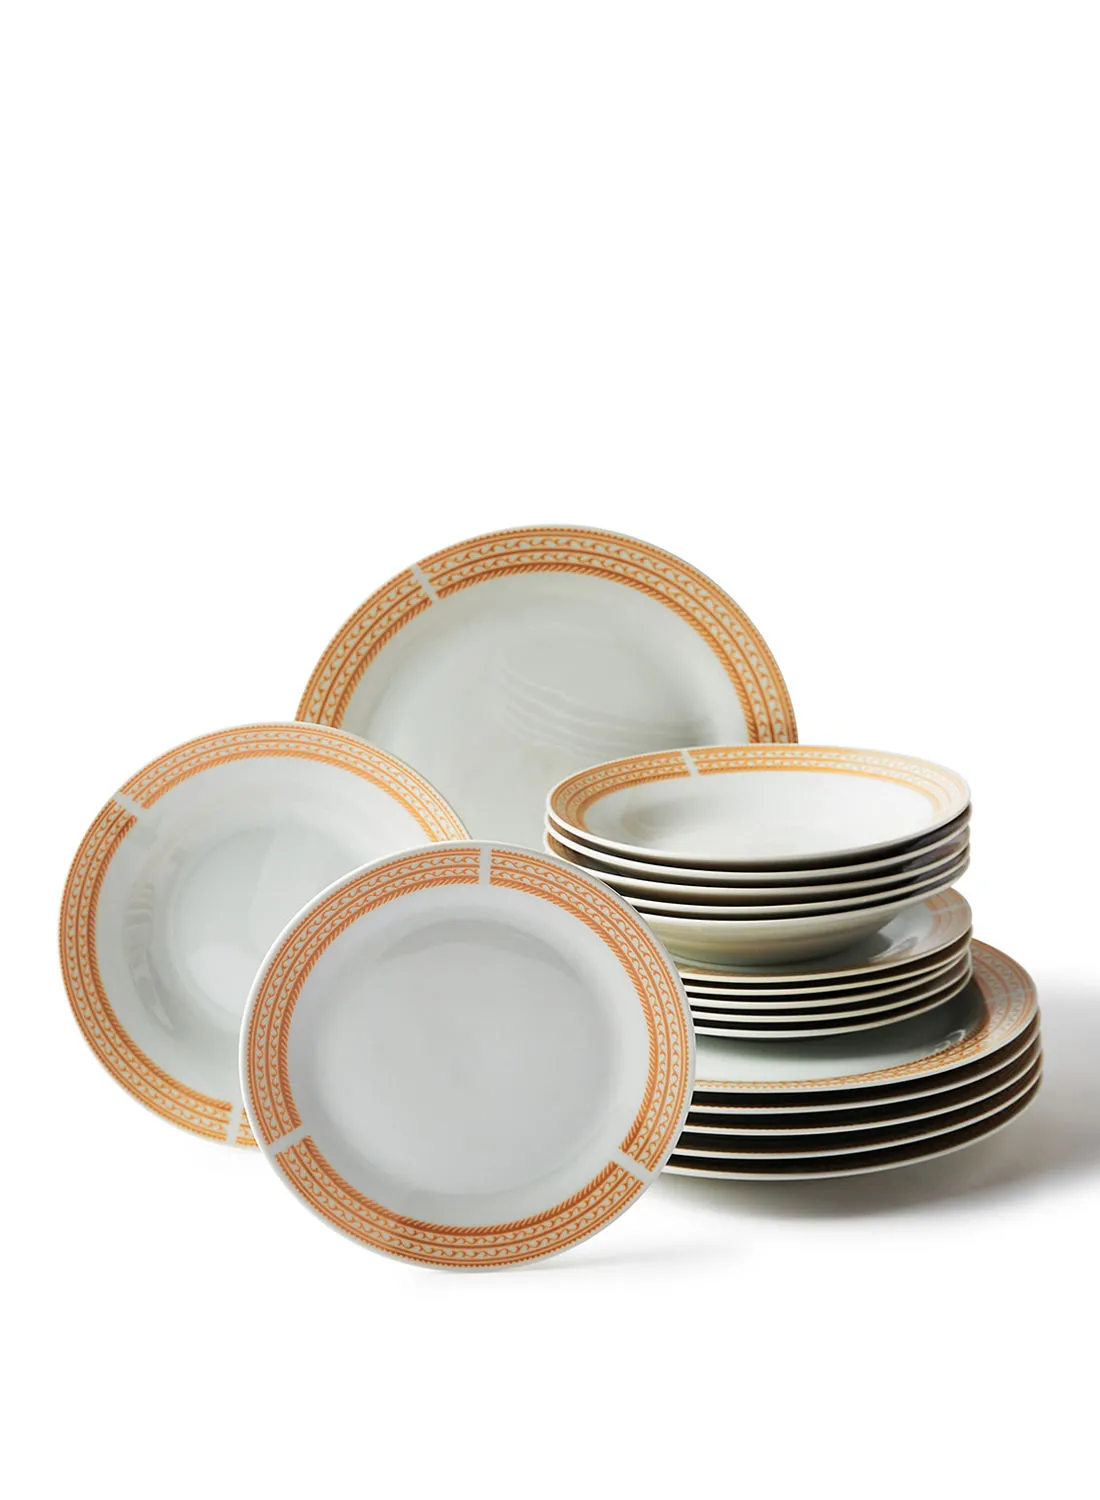 noon east 12 Piece Porcelain Dinner Set - Dishes, Plates - Dinner Plate, Side Plate, Soup Plate - Serves 4 - Festive Design Turin/Gold